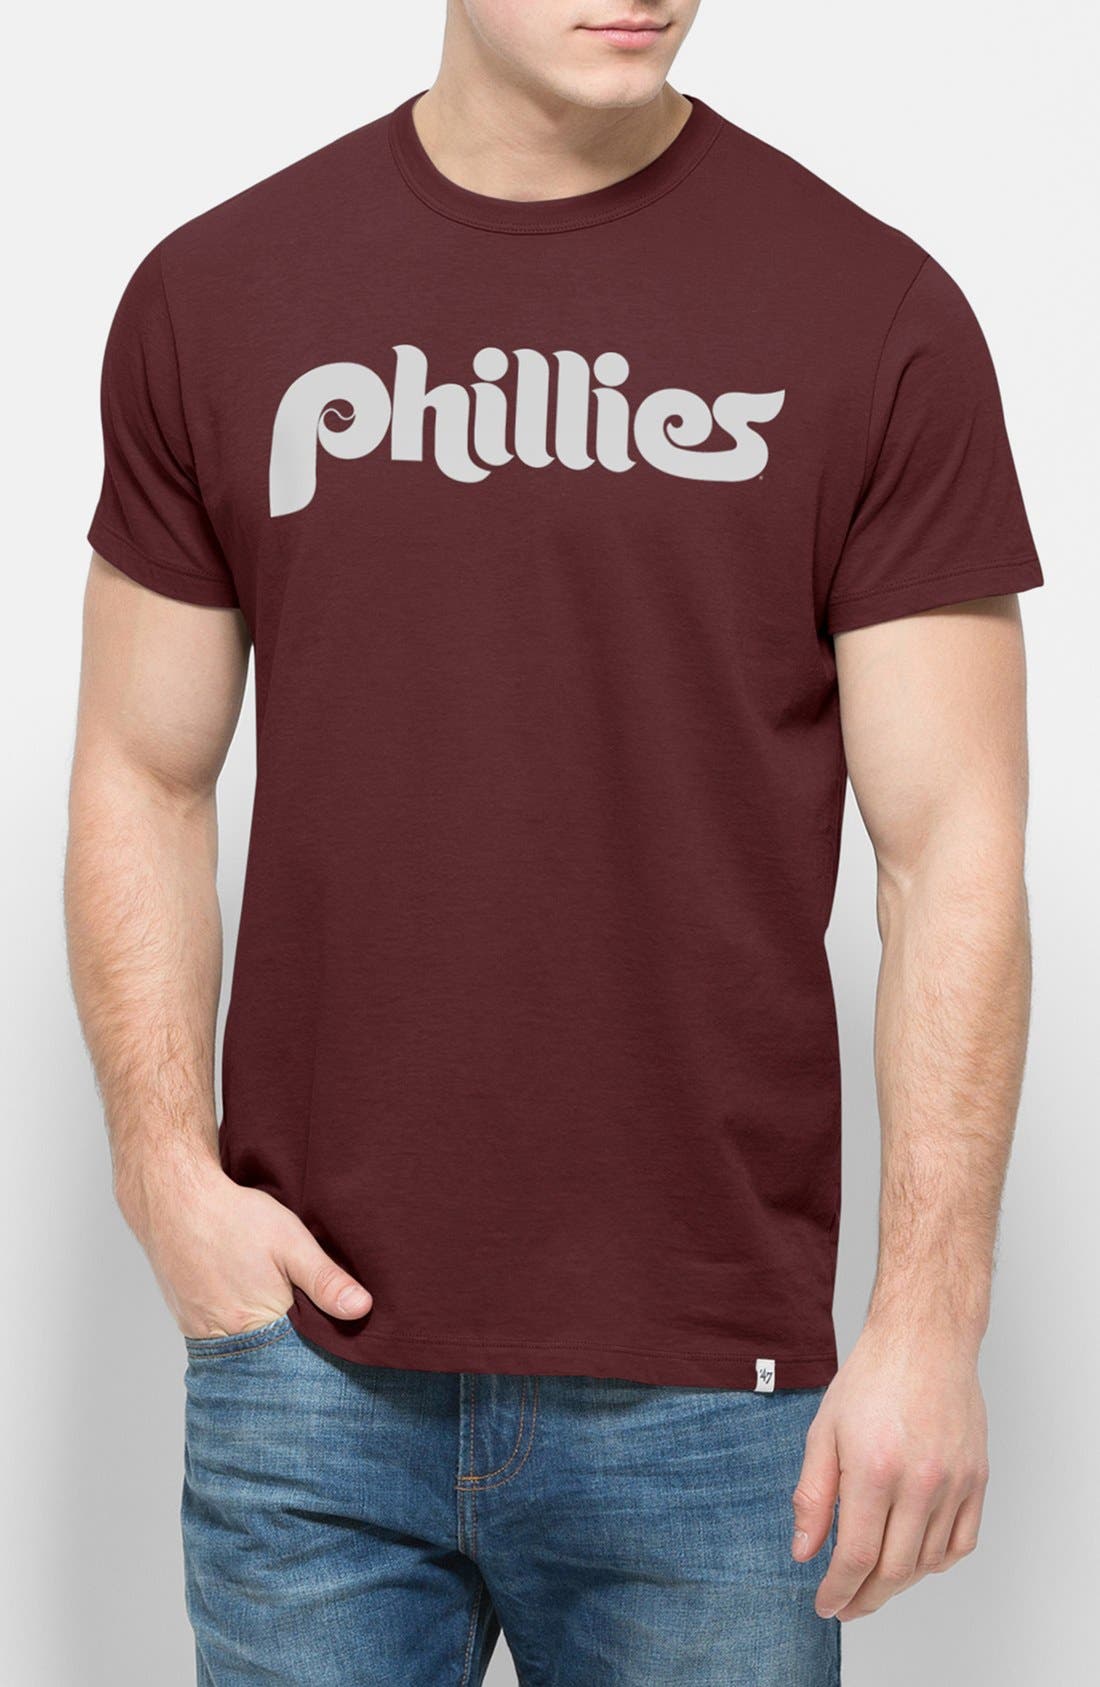 phillies spring training t shirts